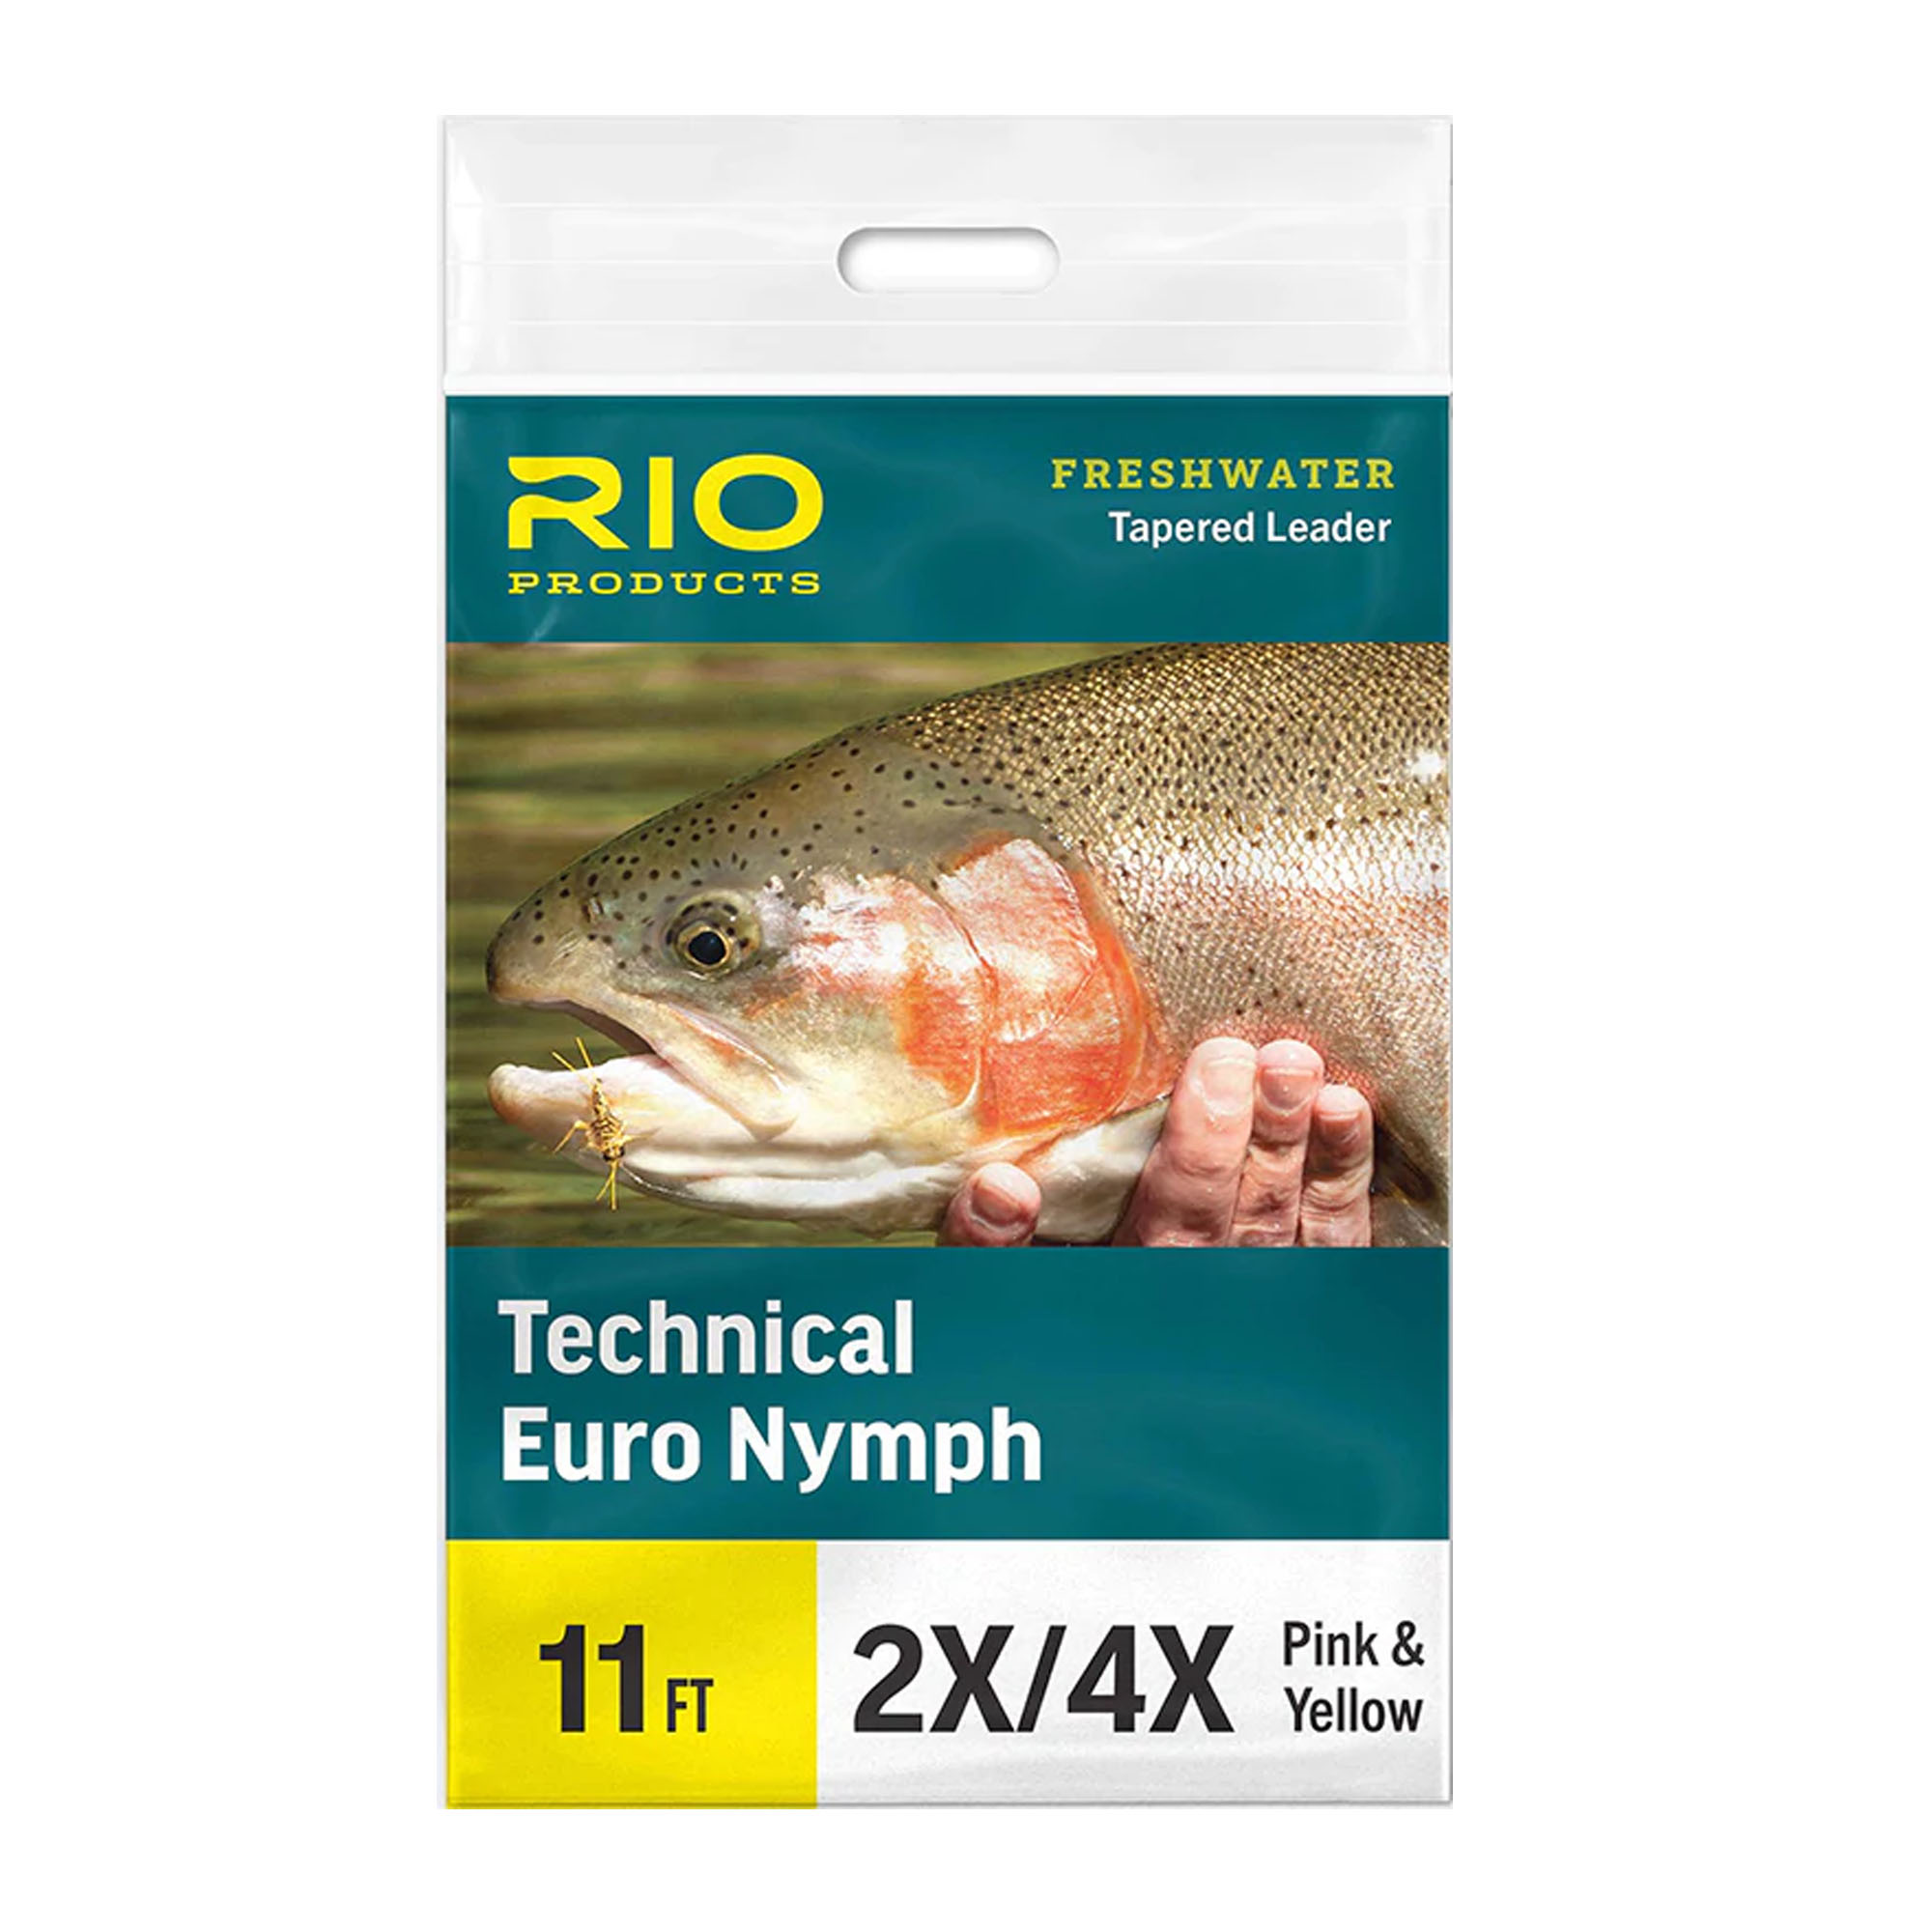 RIO Technical Euro Nymph Leader – Guide Flyfishing, Fly Fishing Rods,  Reels, Sage, Redington, RIO